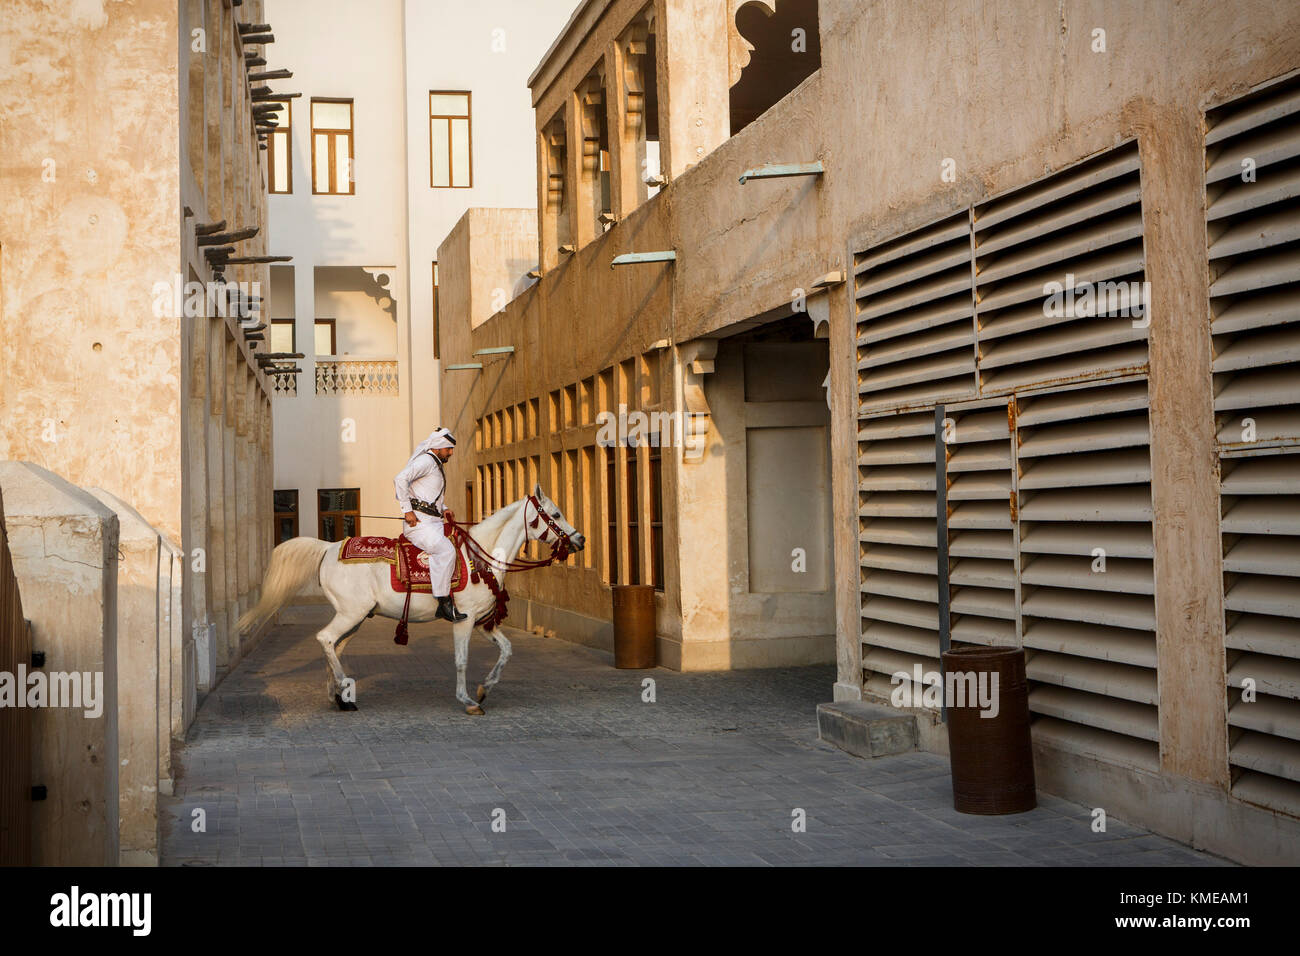 Man in traditional Arabic clothing riding horse at Souq Waqif,Doha,Qatar Stock Photo